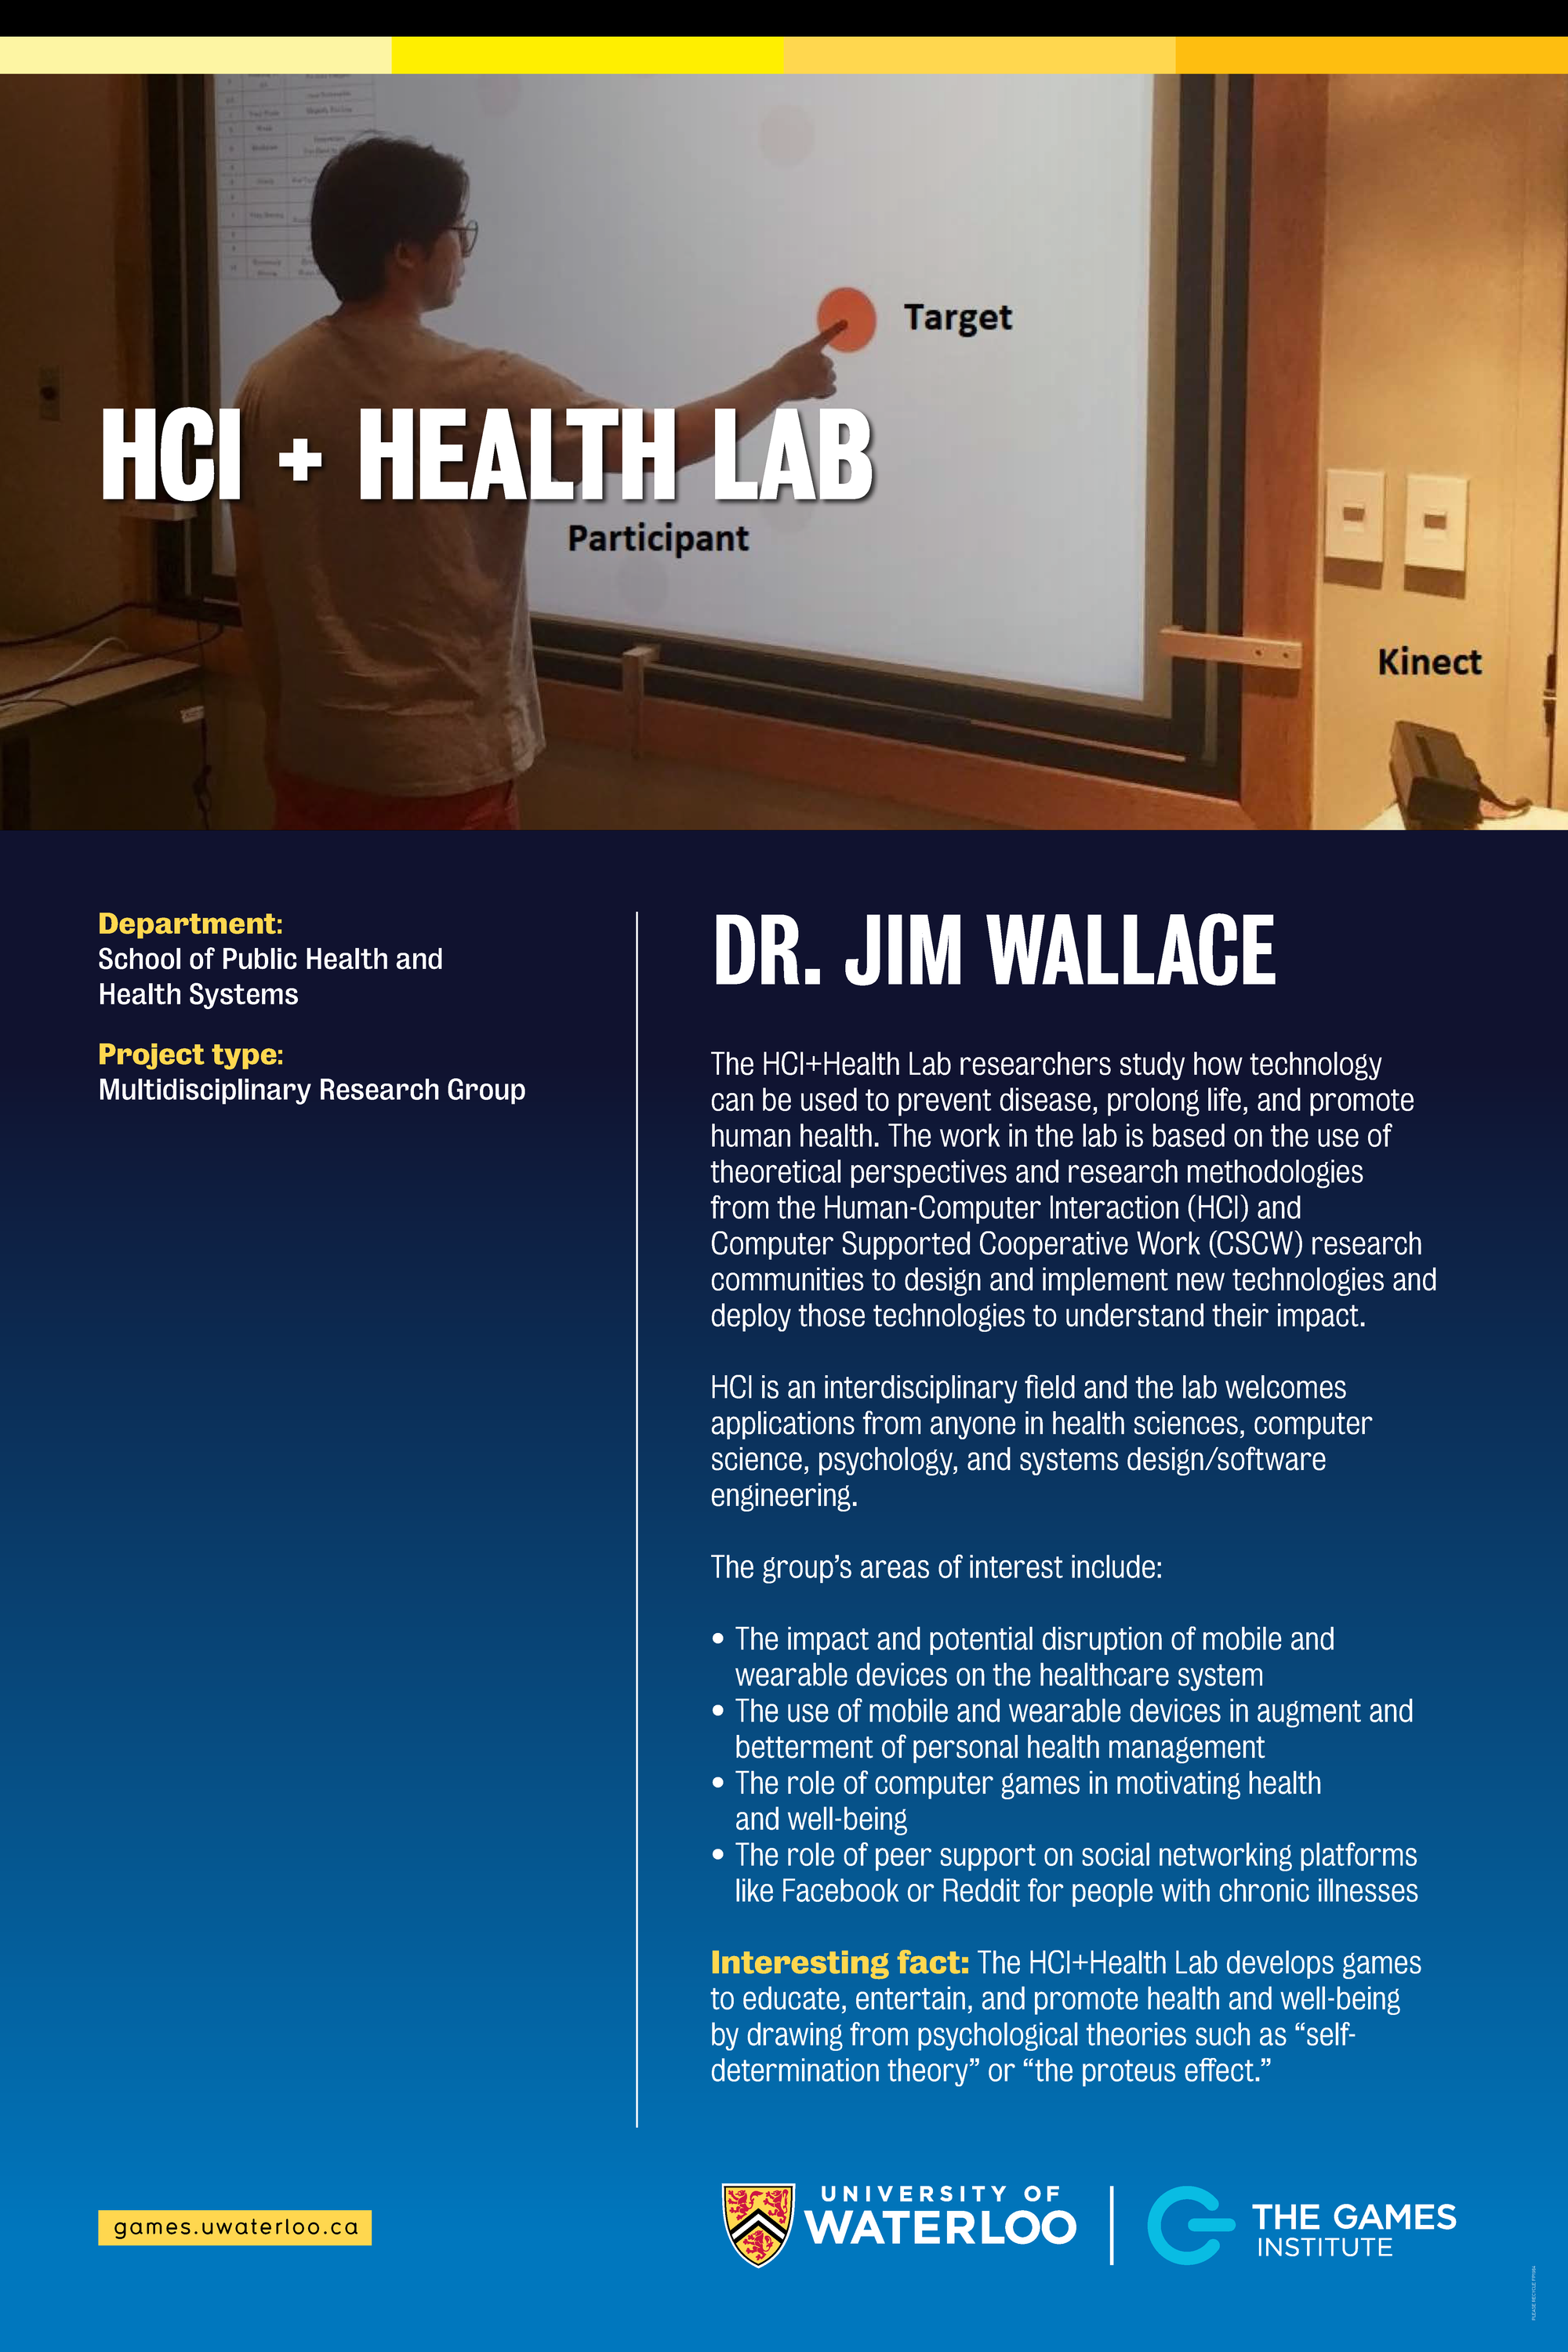 HCI Health Lab